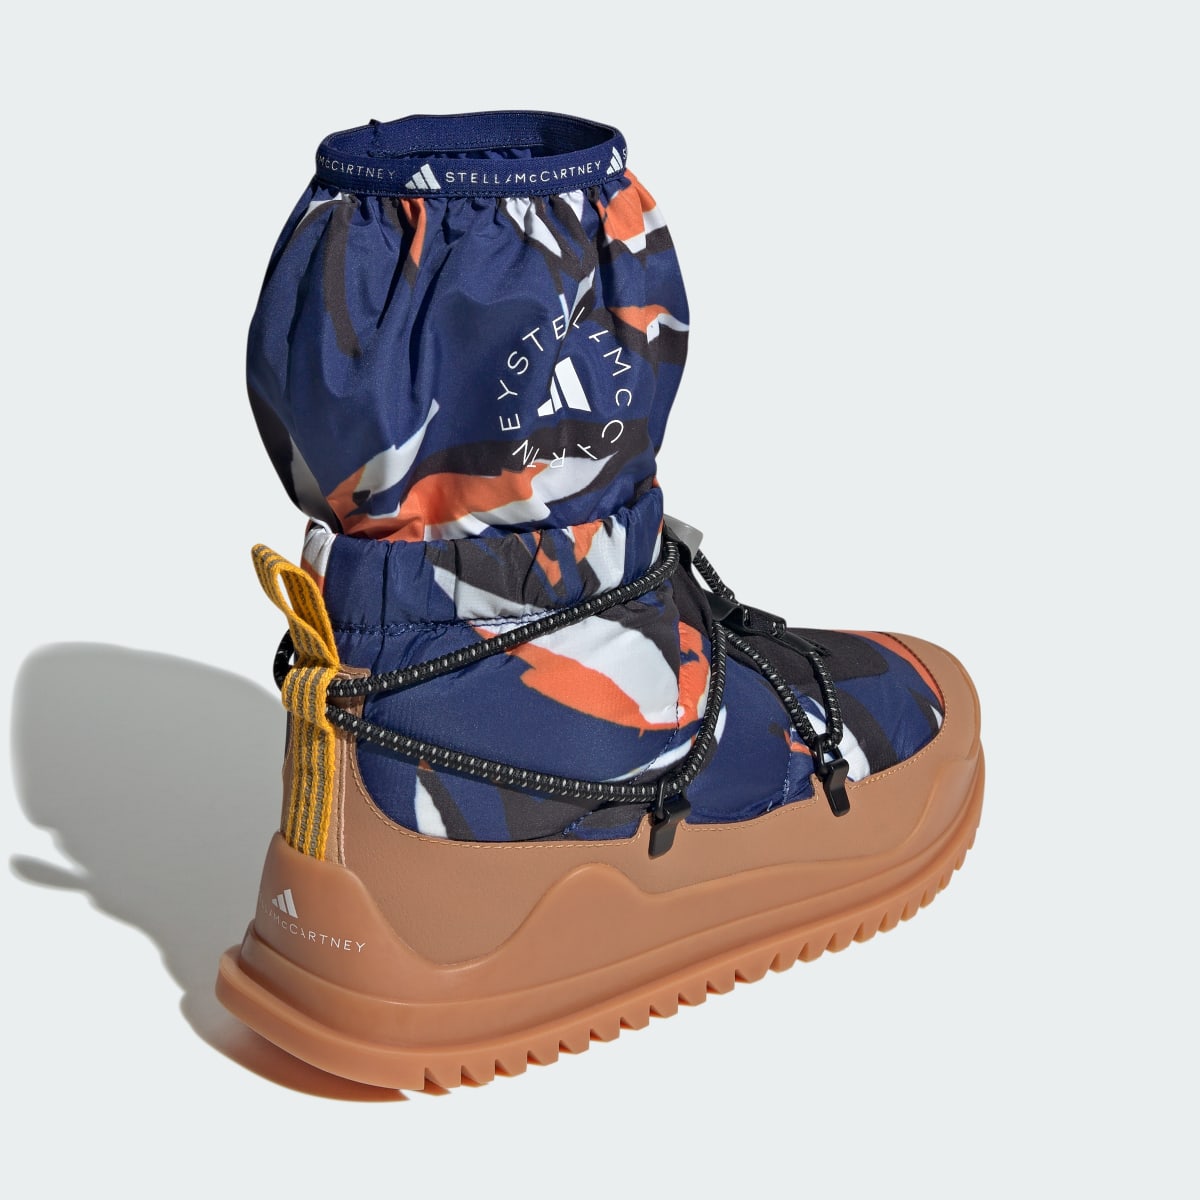 Adidas by Stella McCartney Winter Boots. 6